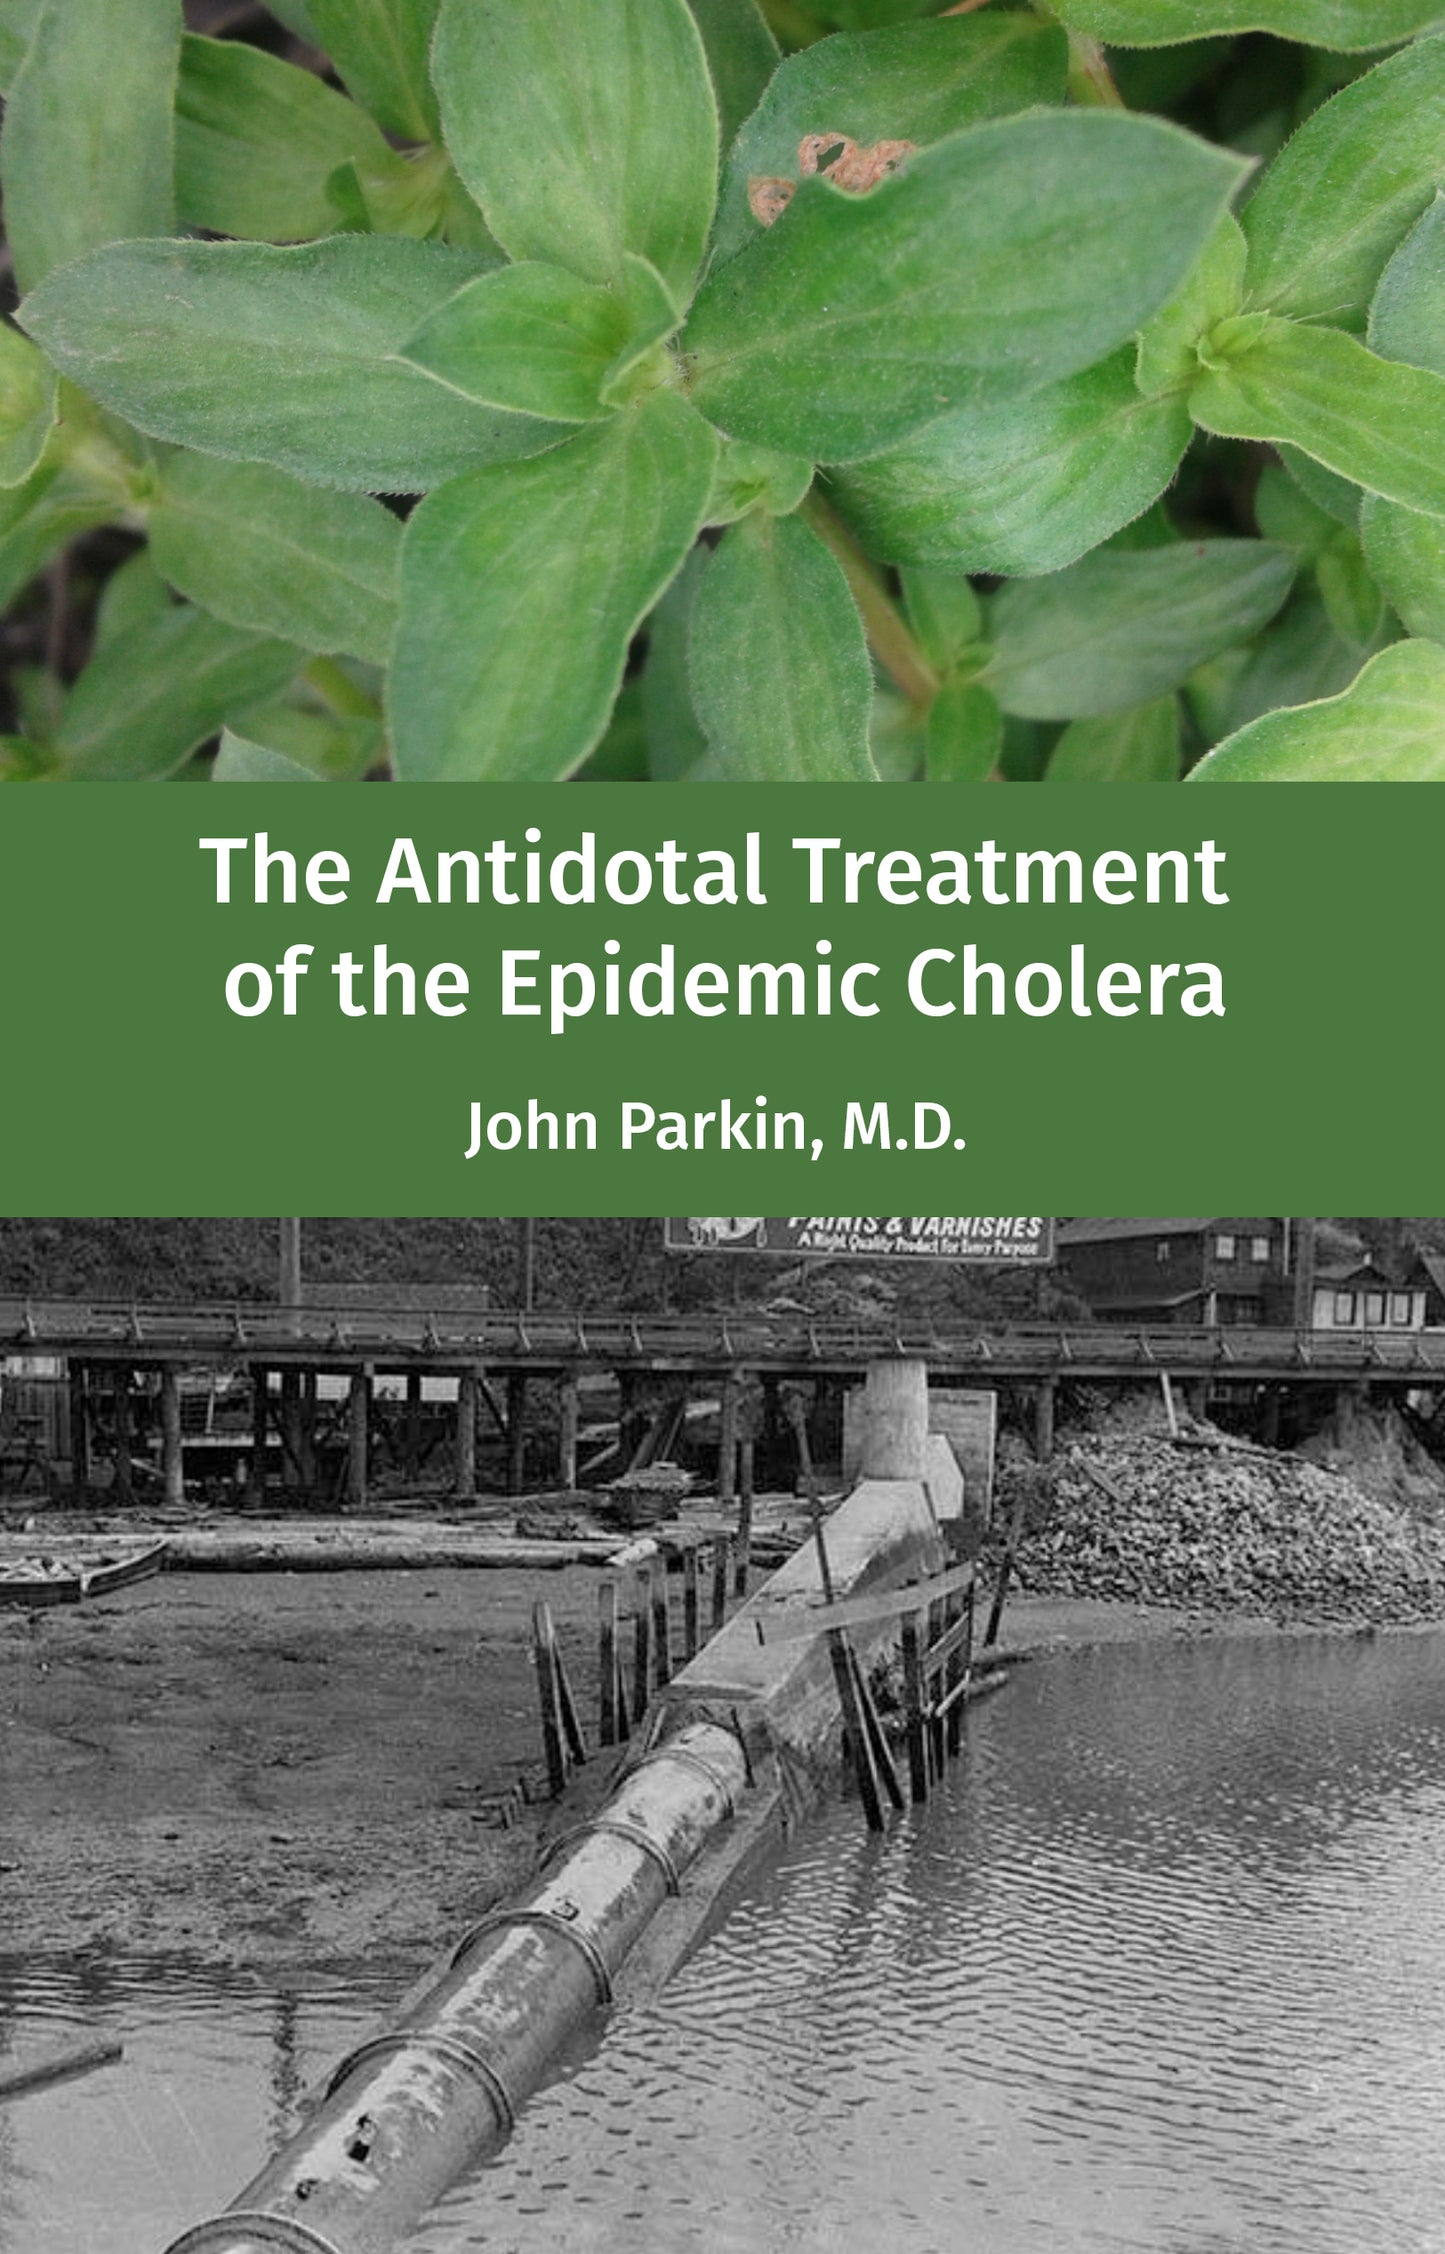 The Antidotal Treatment of the Epidemic Cholera